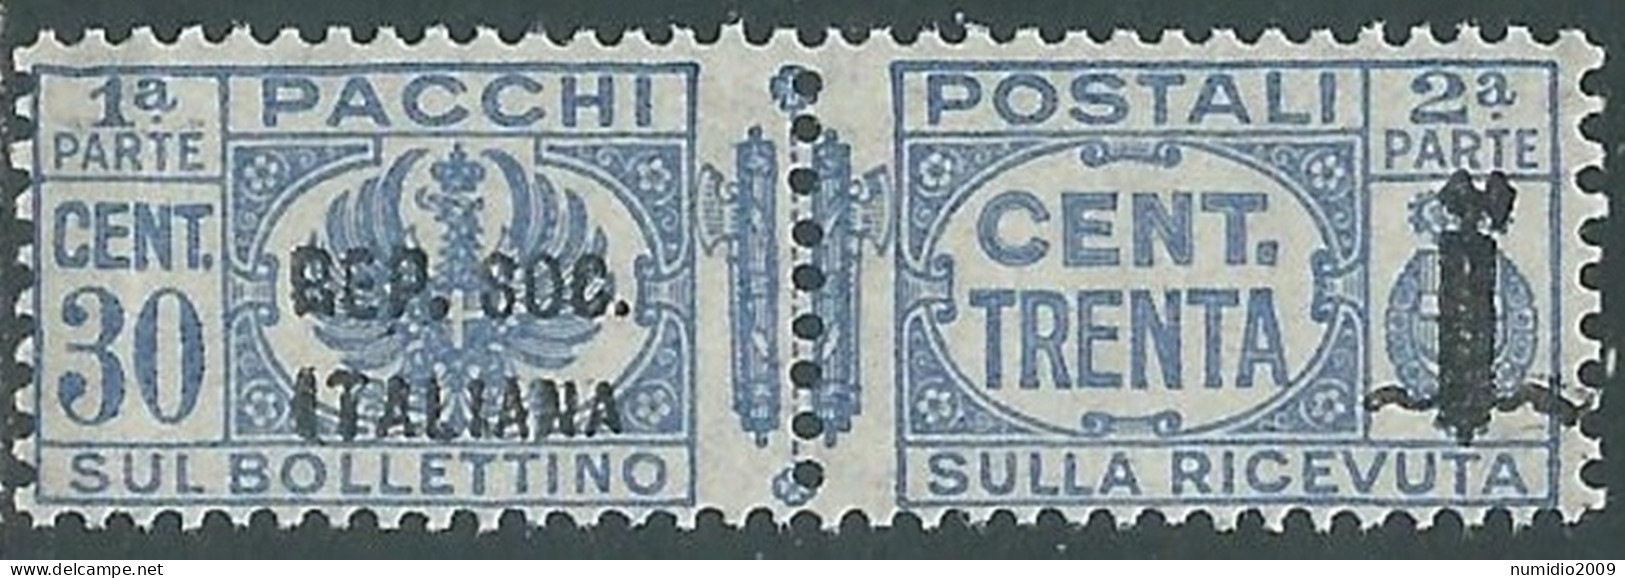 1944 RSI PACCHI POSTALI 30 CENT MNH ** - P31-9 - Postal Parcels